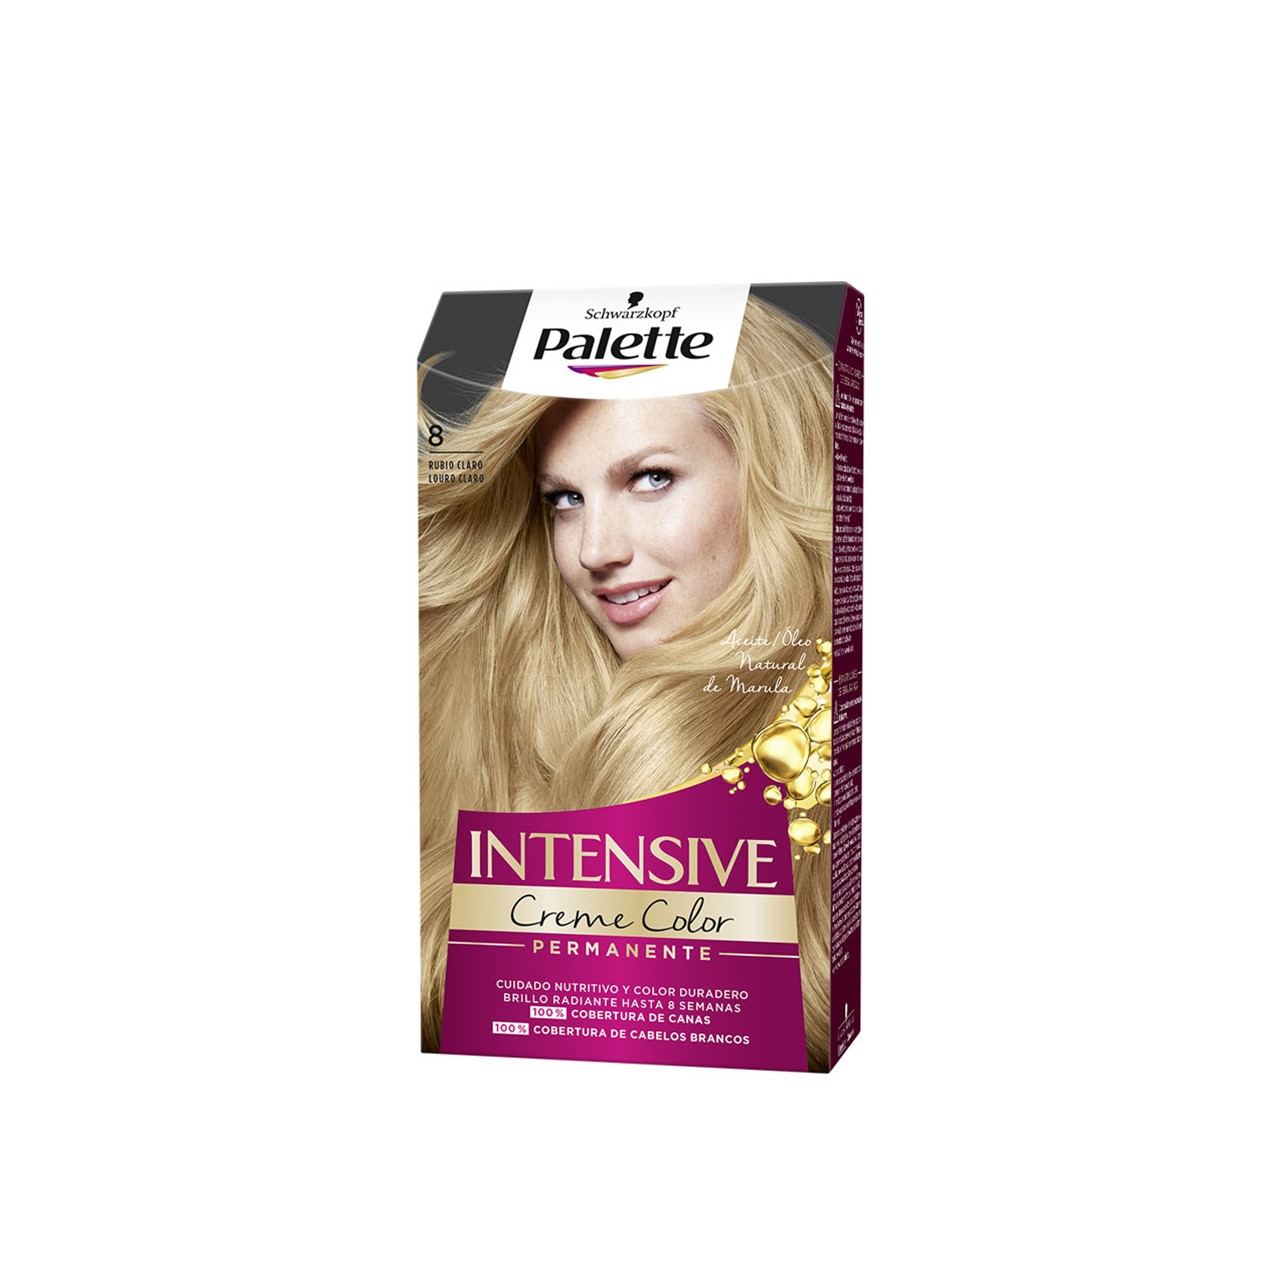 Schwarzkopf Palette Intensive Creme Color Permanent Hair Dye 8 Light Blonde